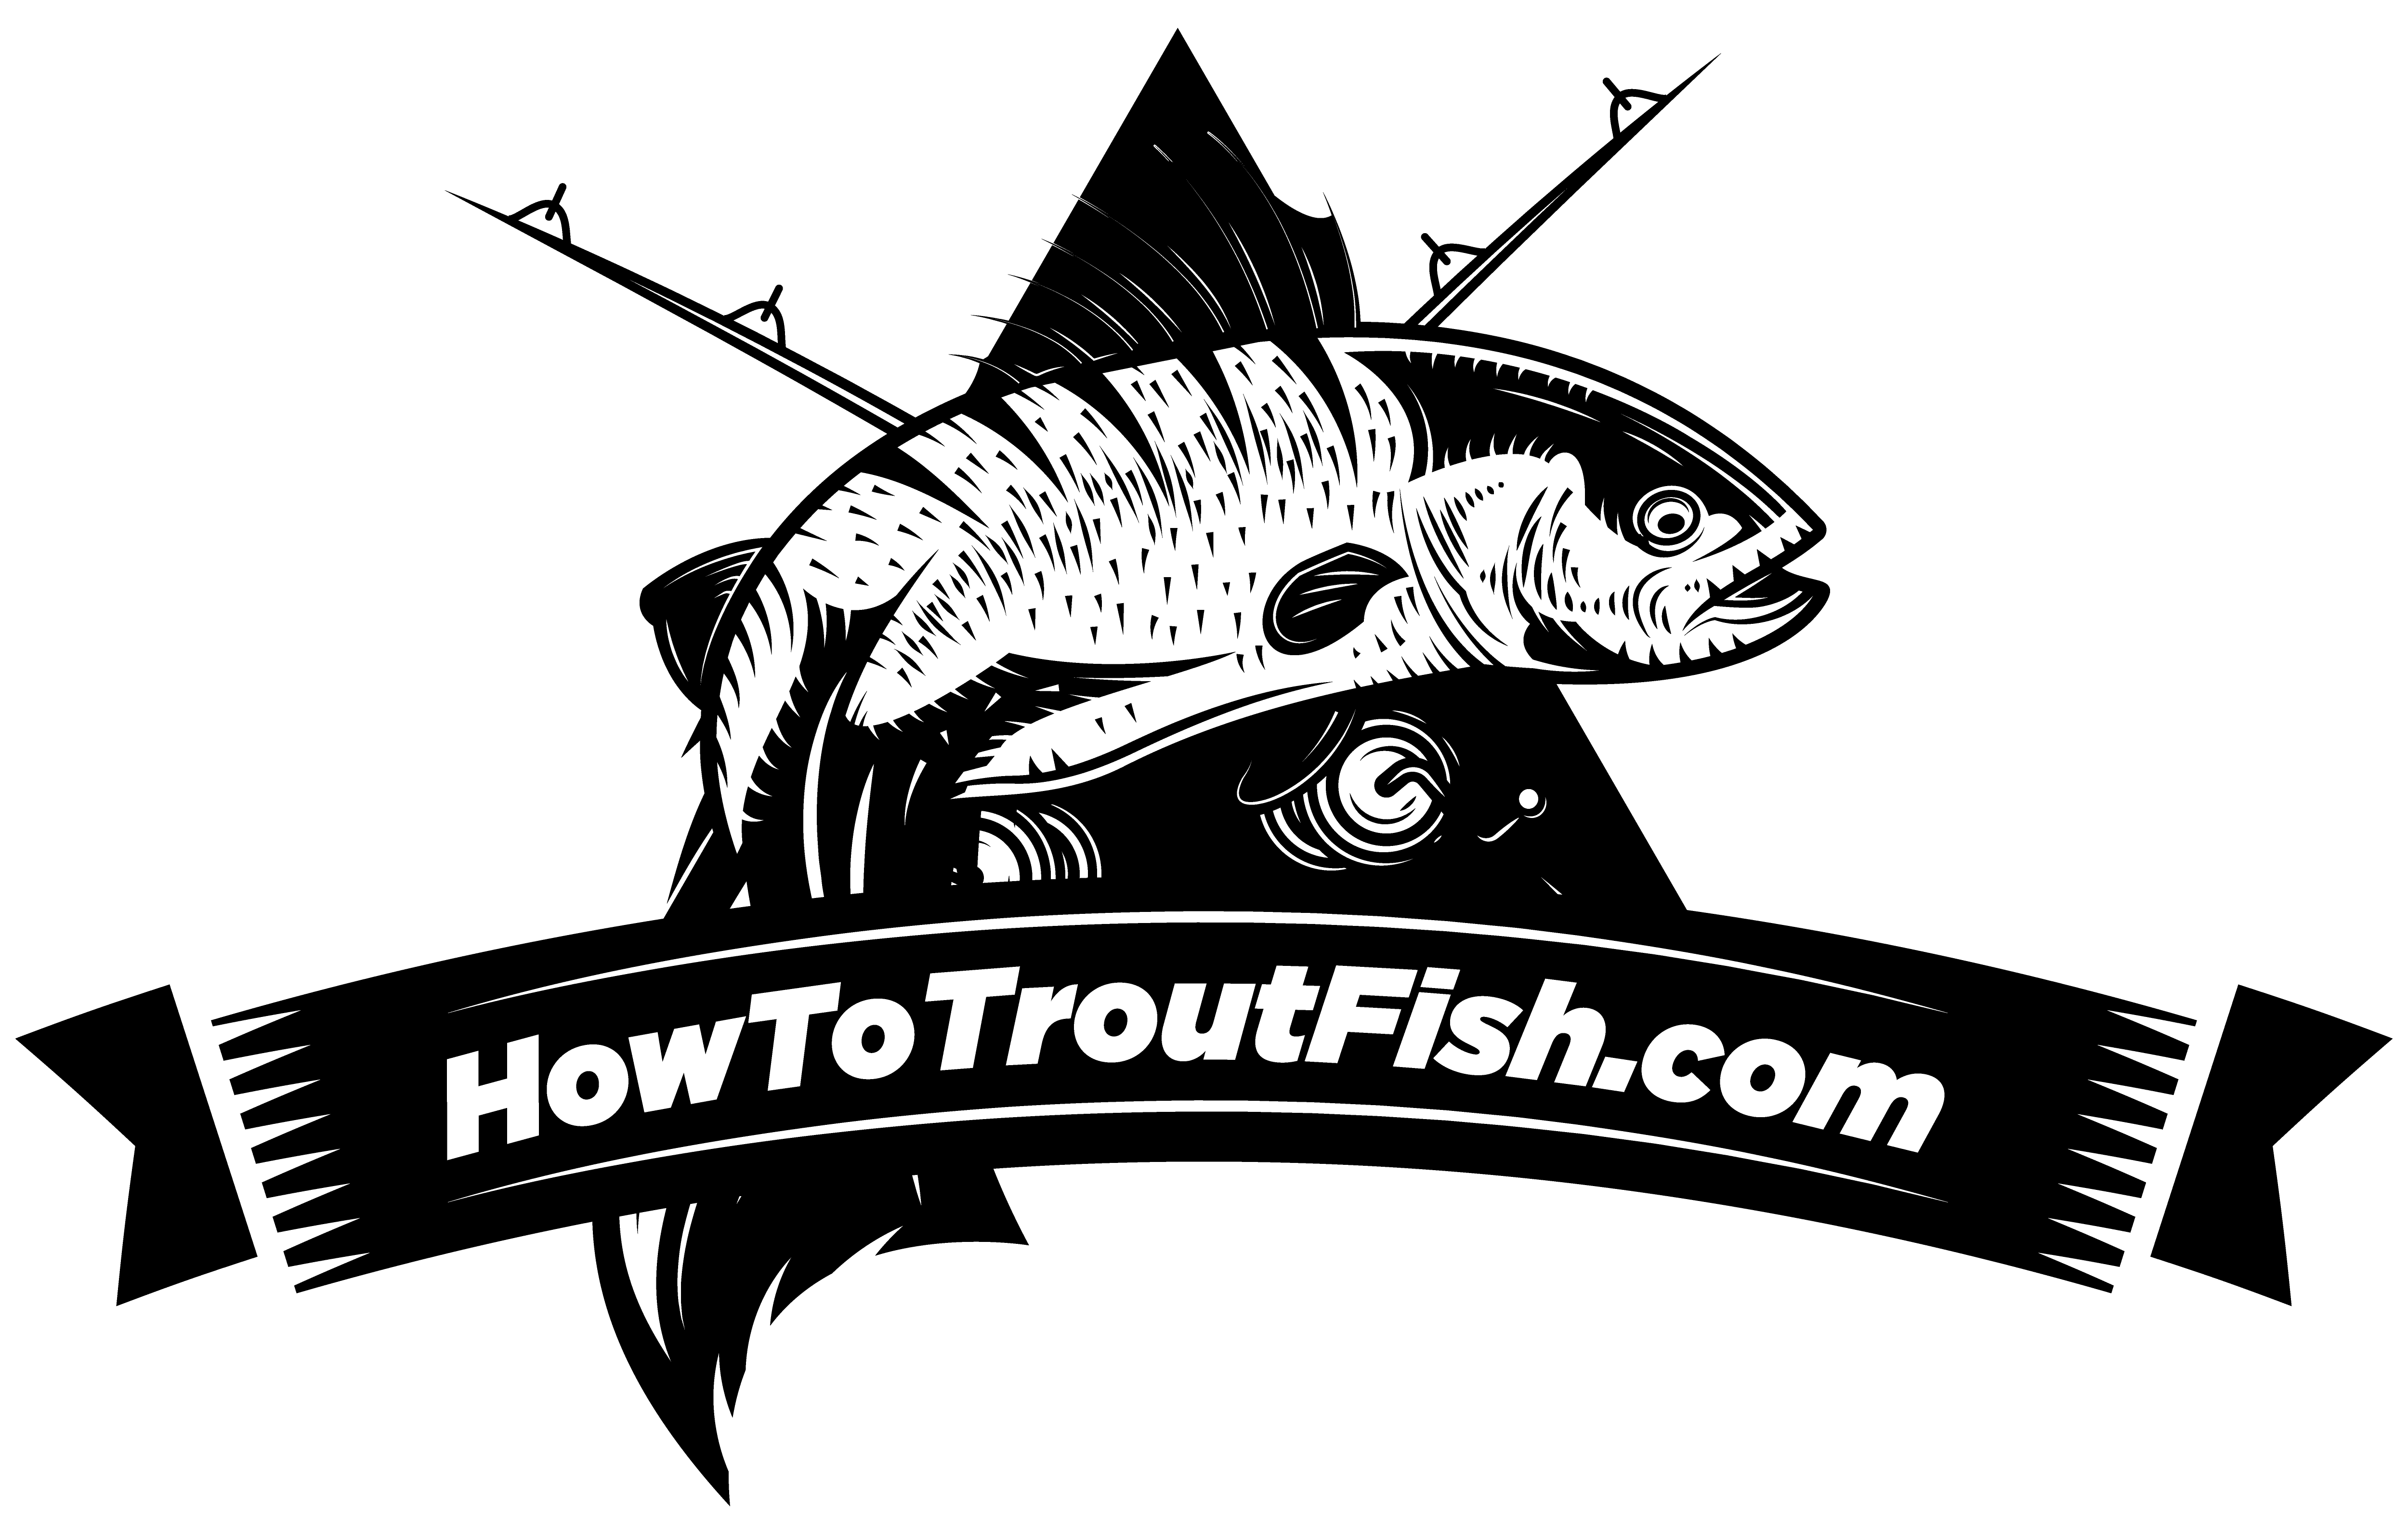 HowToTroutFish.com